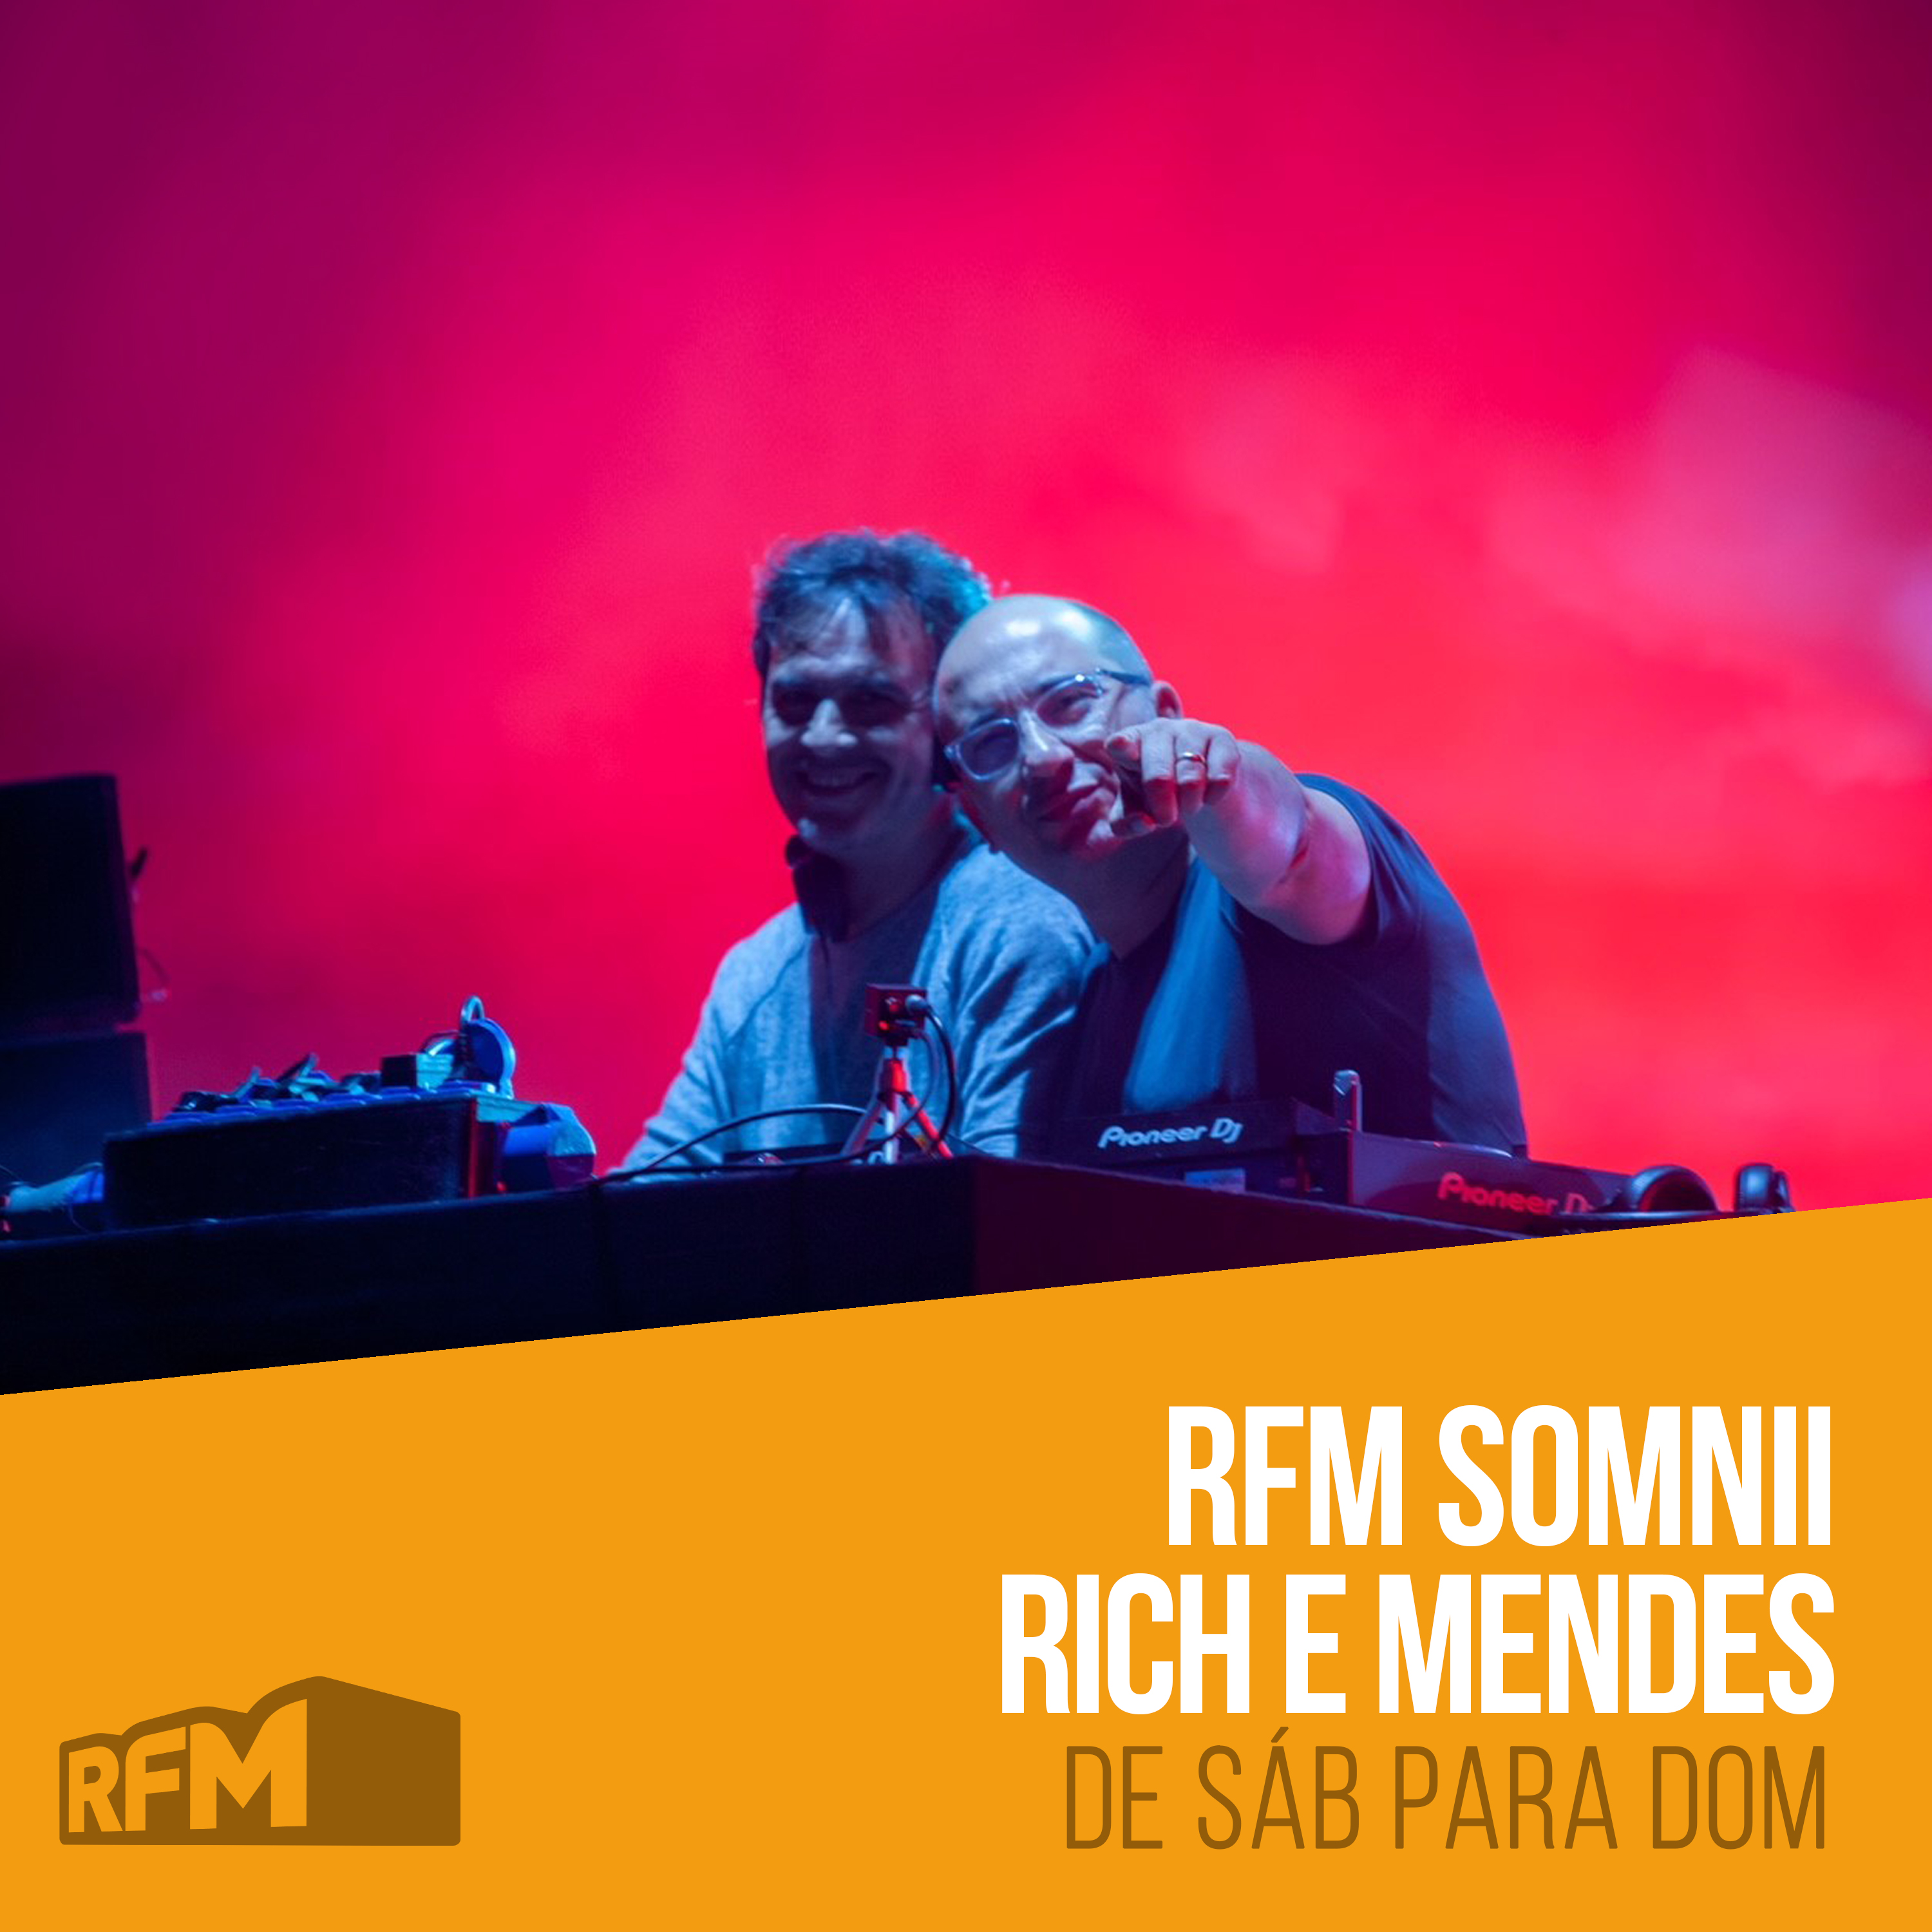 RFM SOMNII RICH E MENDES EP 309